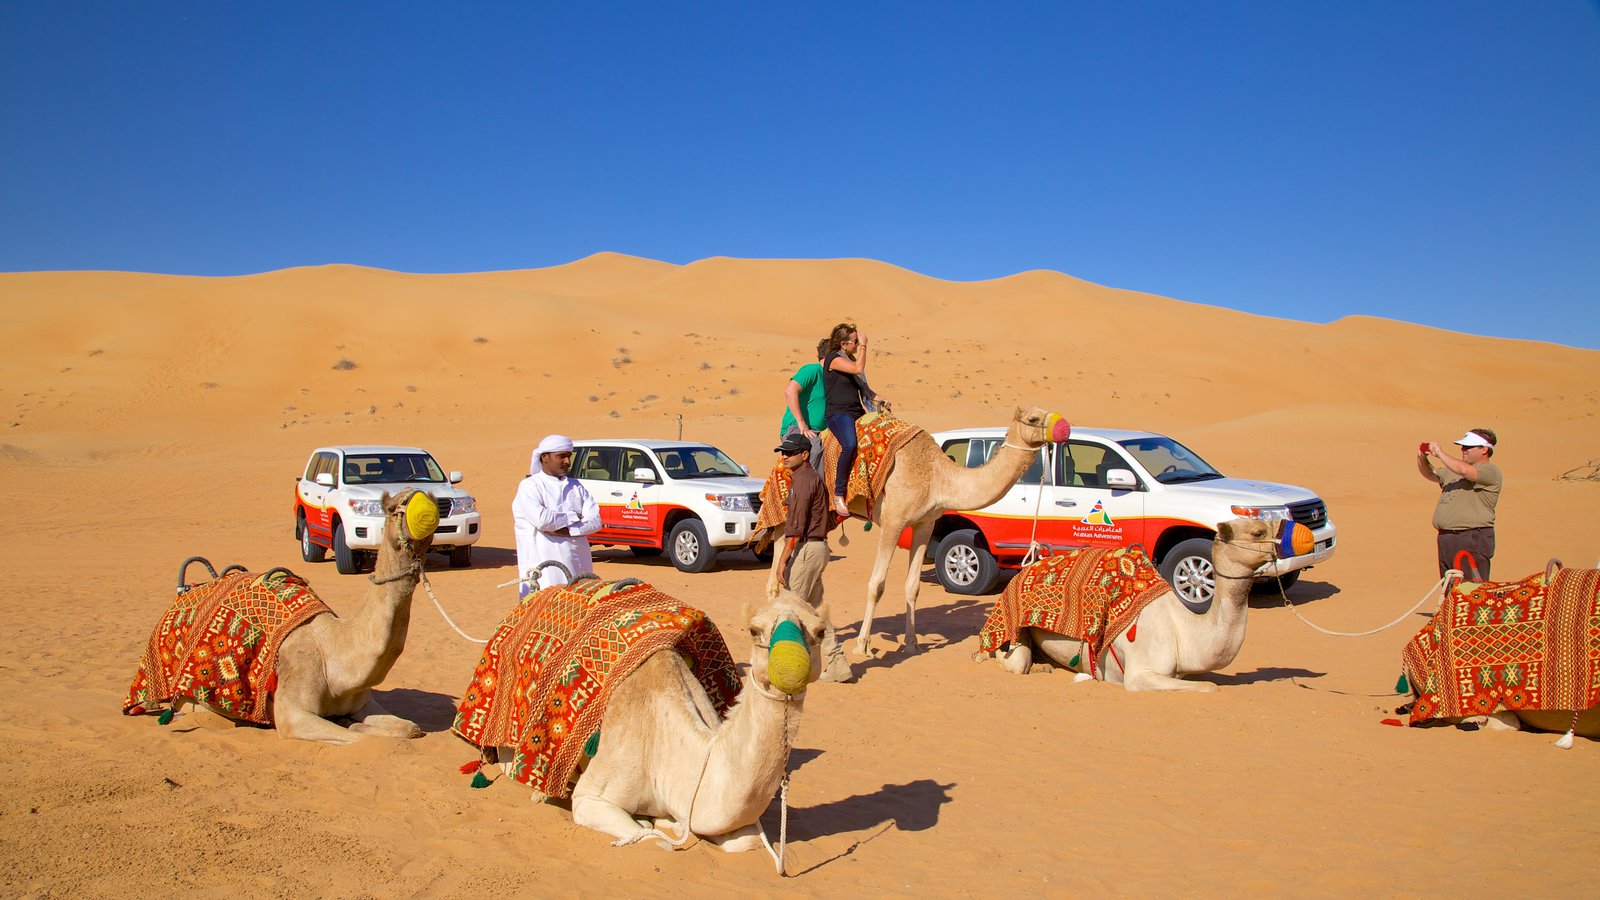 dubai desert safari price booking